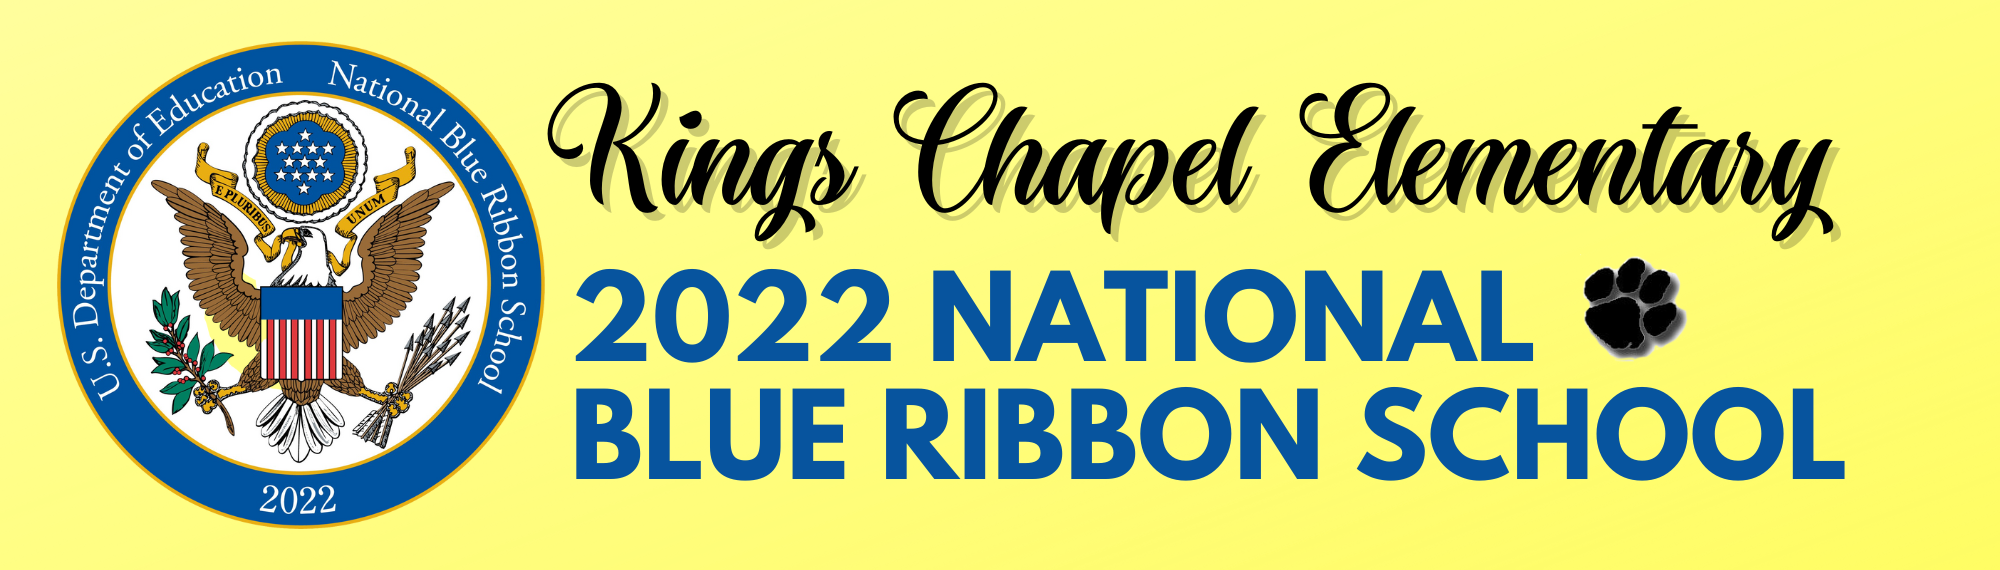 2022 Blue Ribbon School